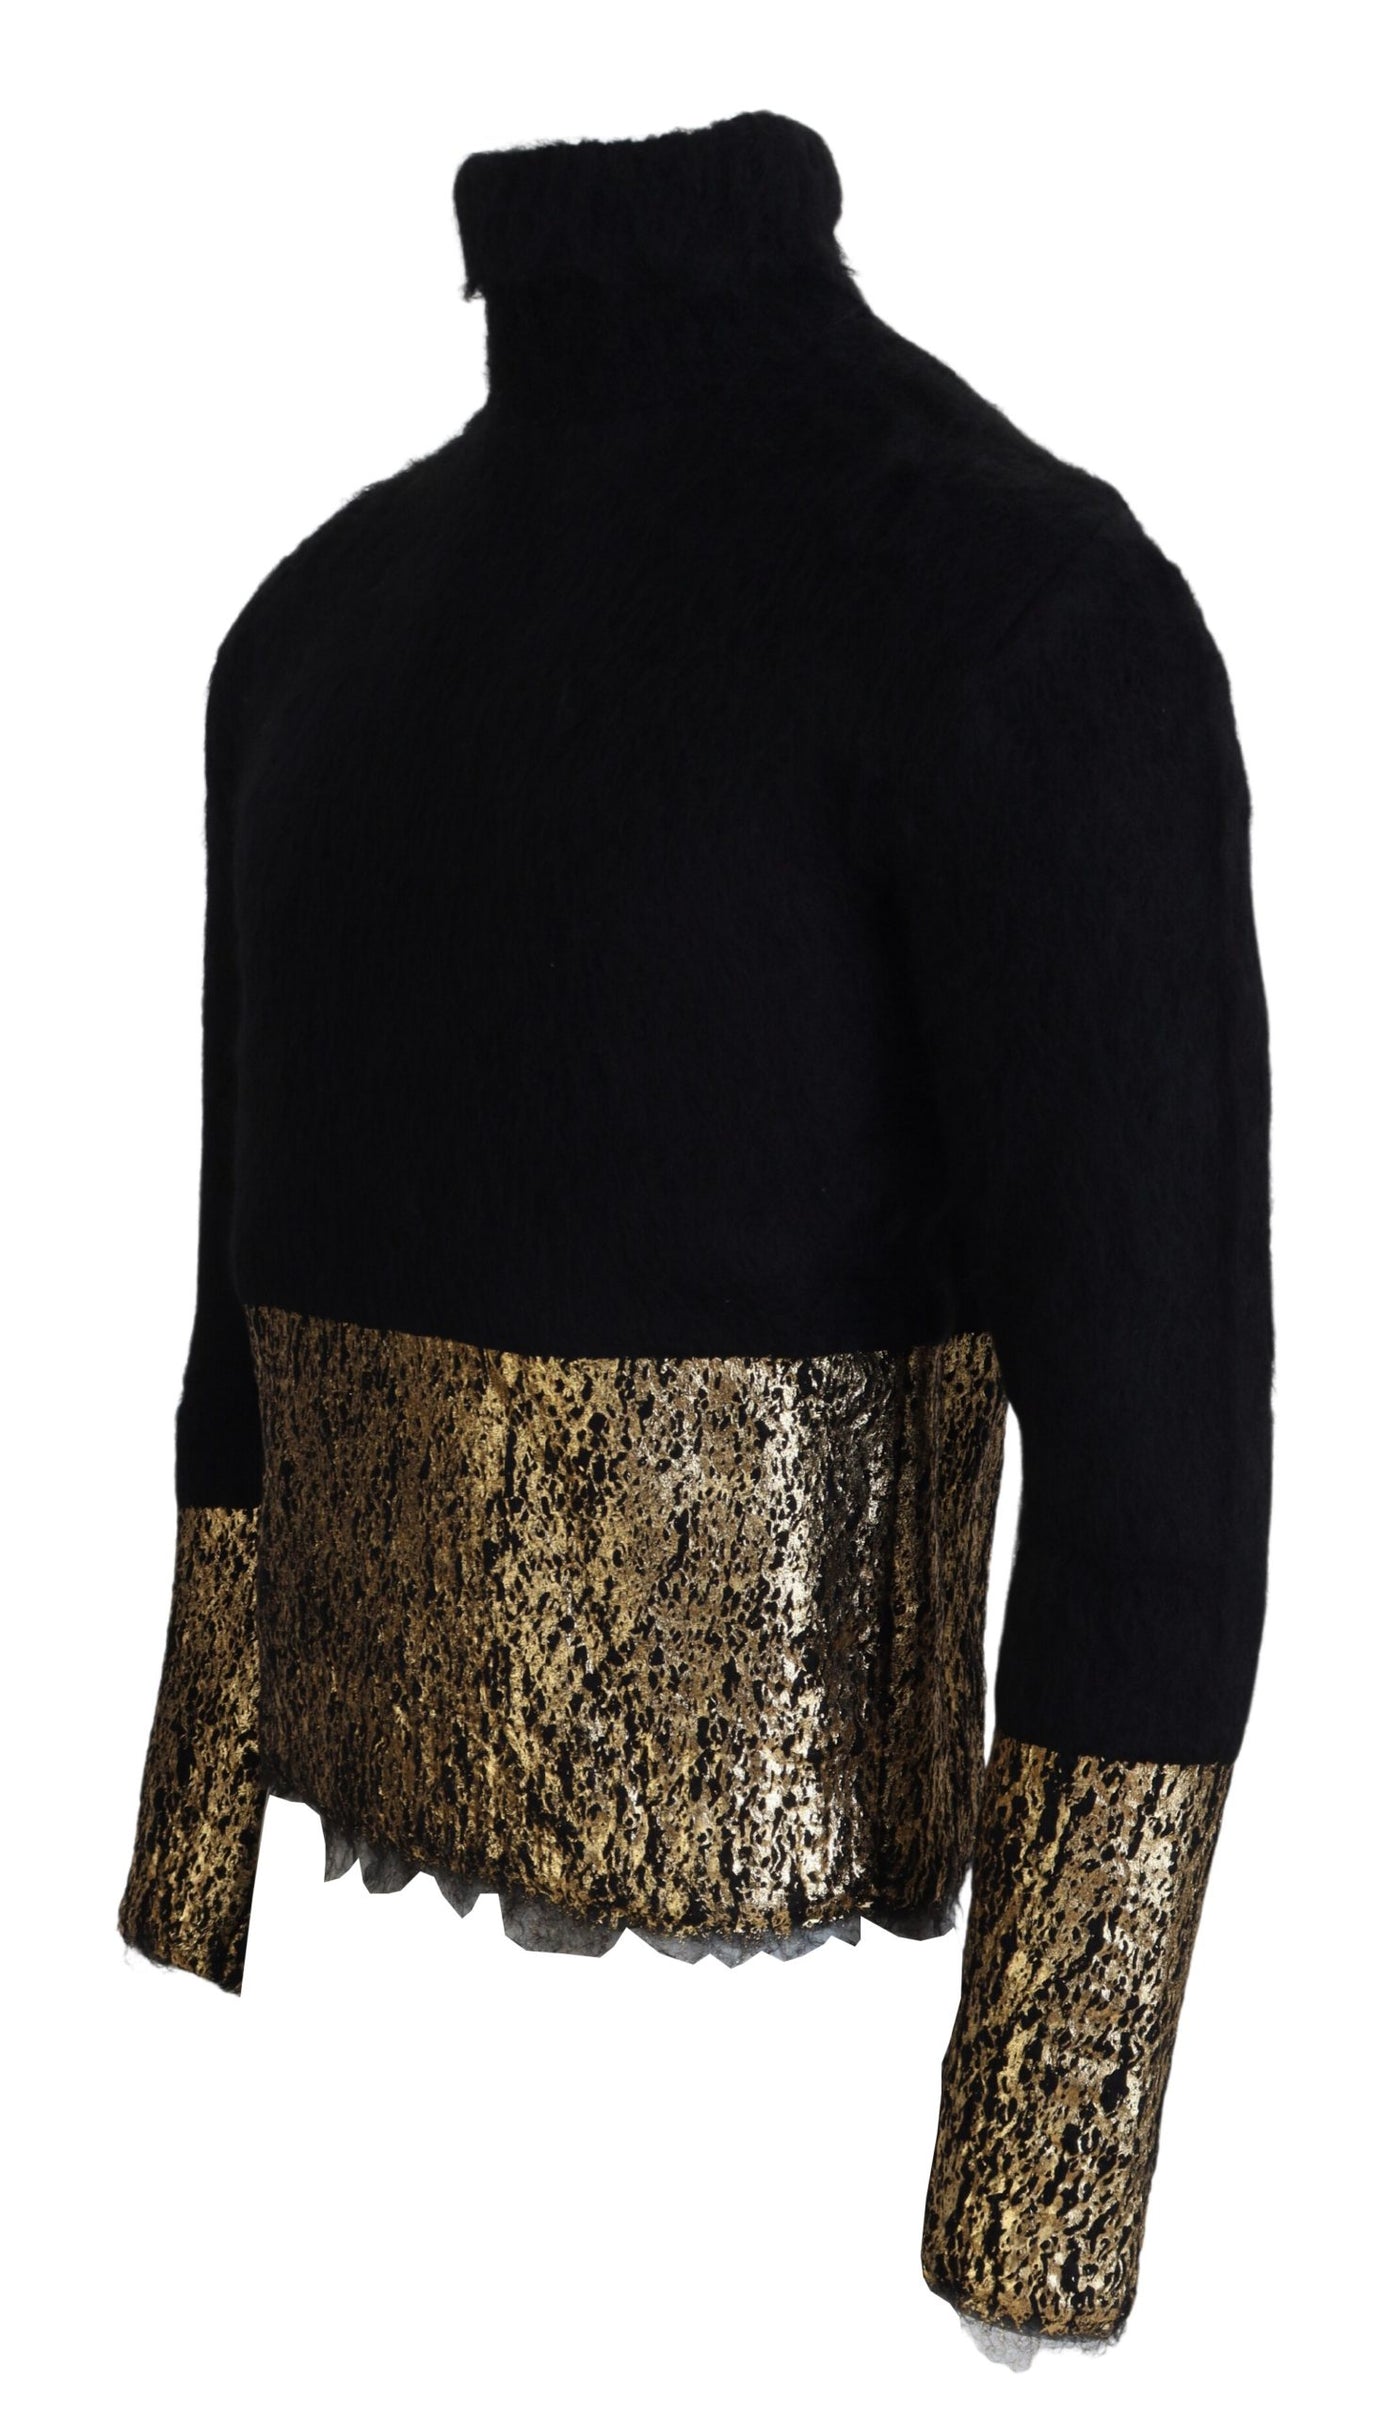 Dolce & Gabbana Black Gold Turtleneck Mohair Pullover s Sweater